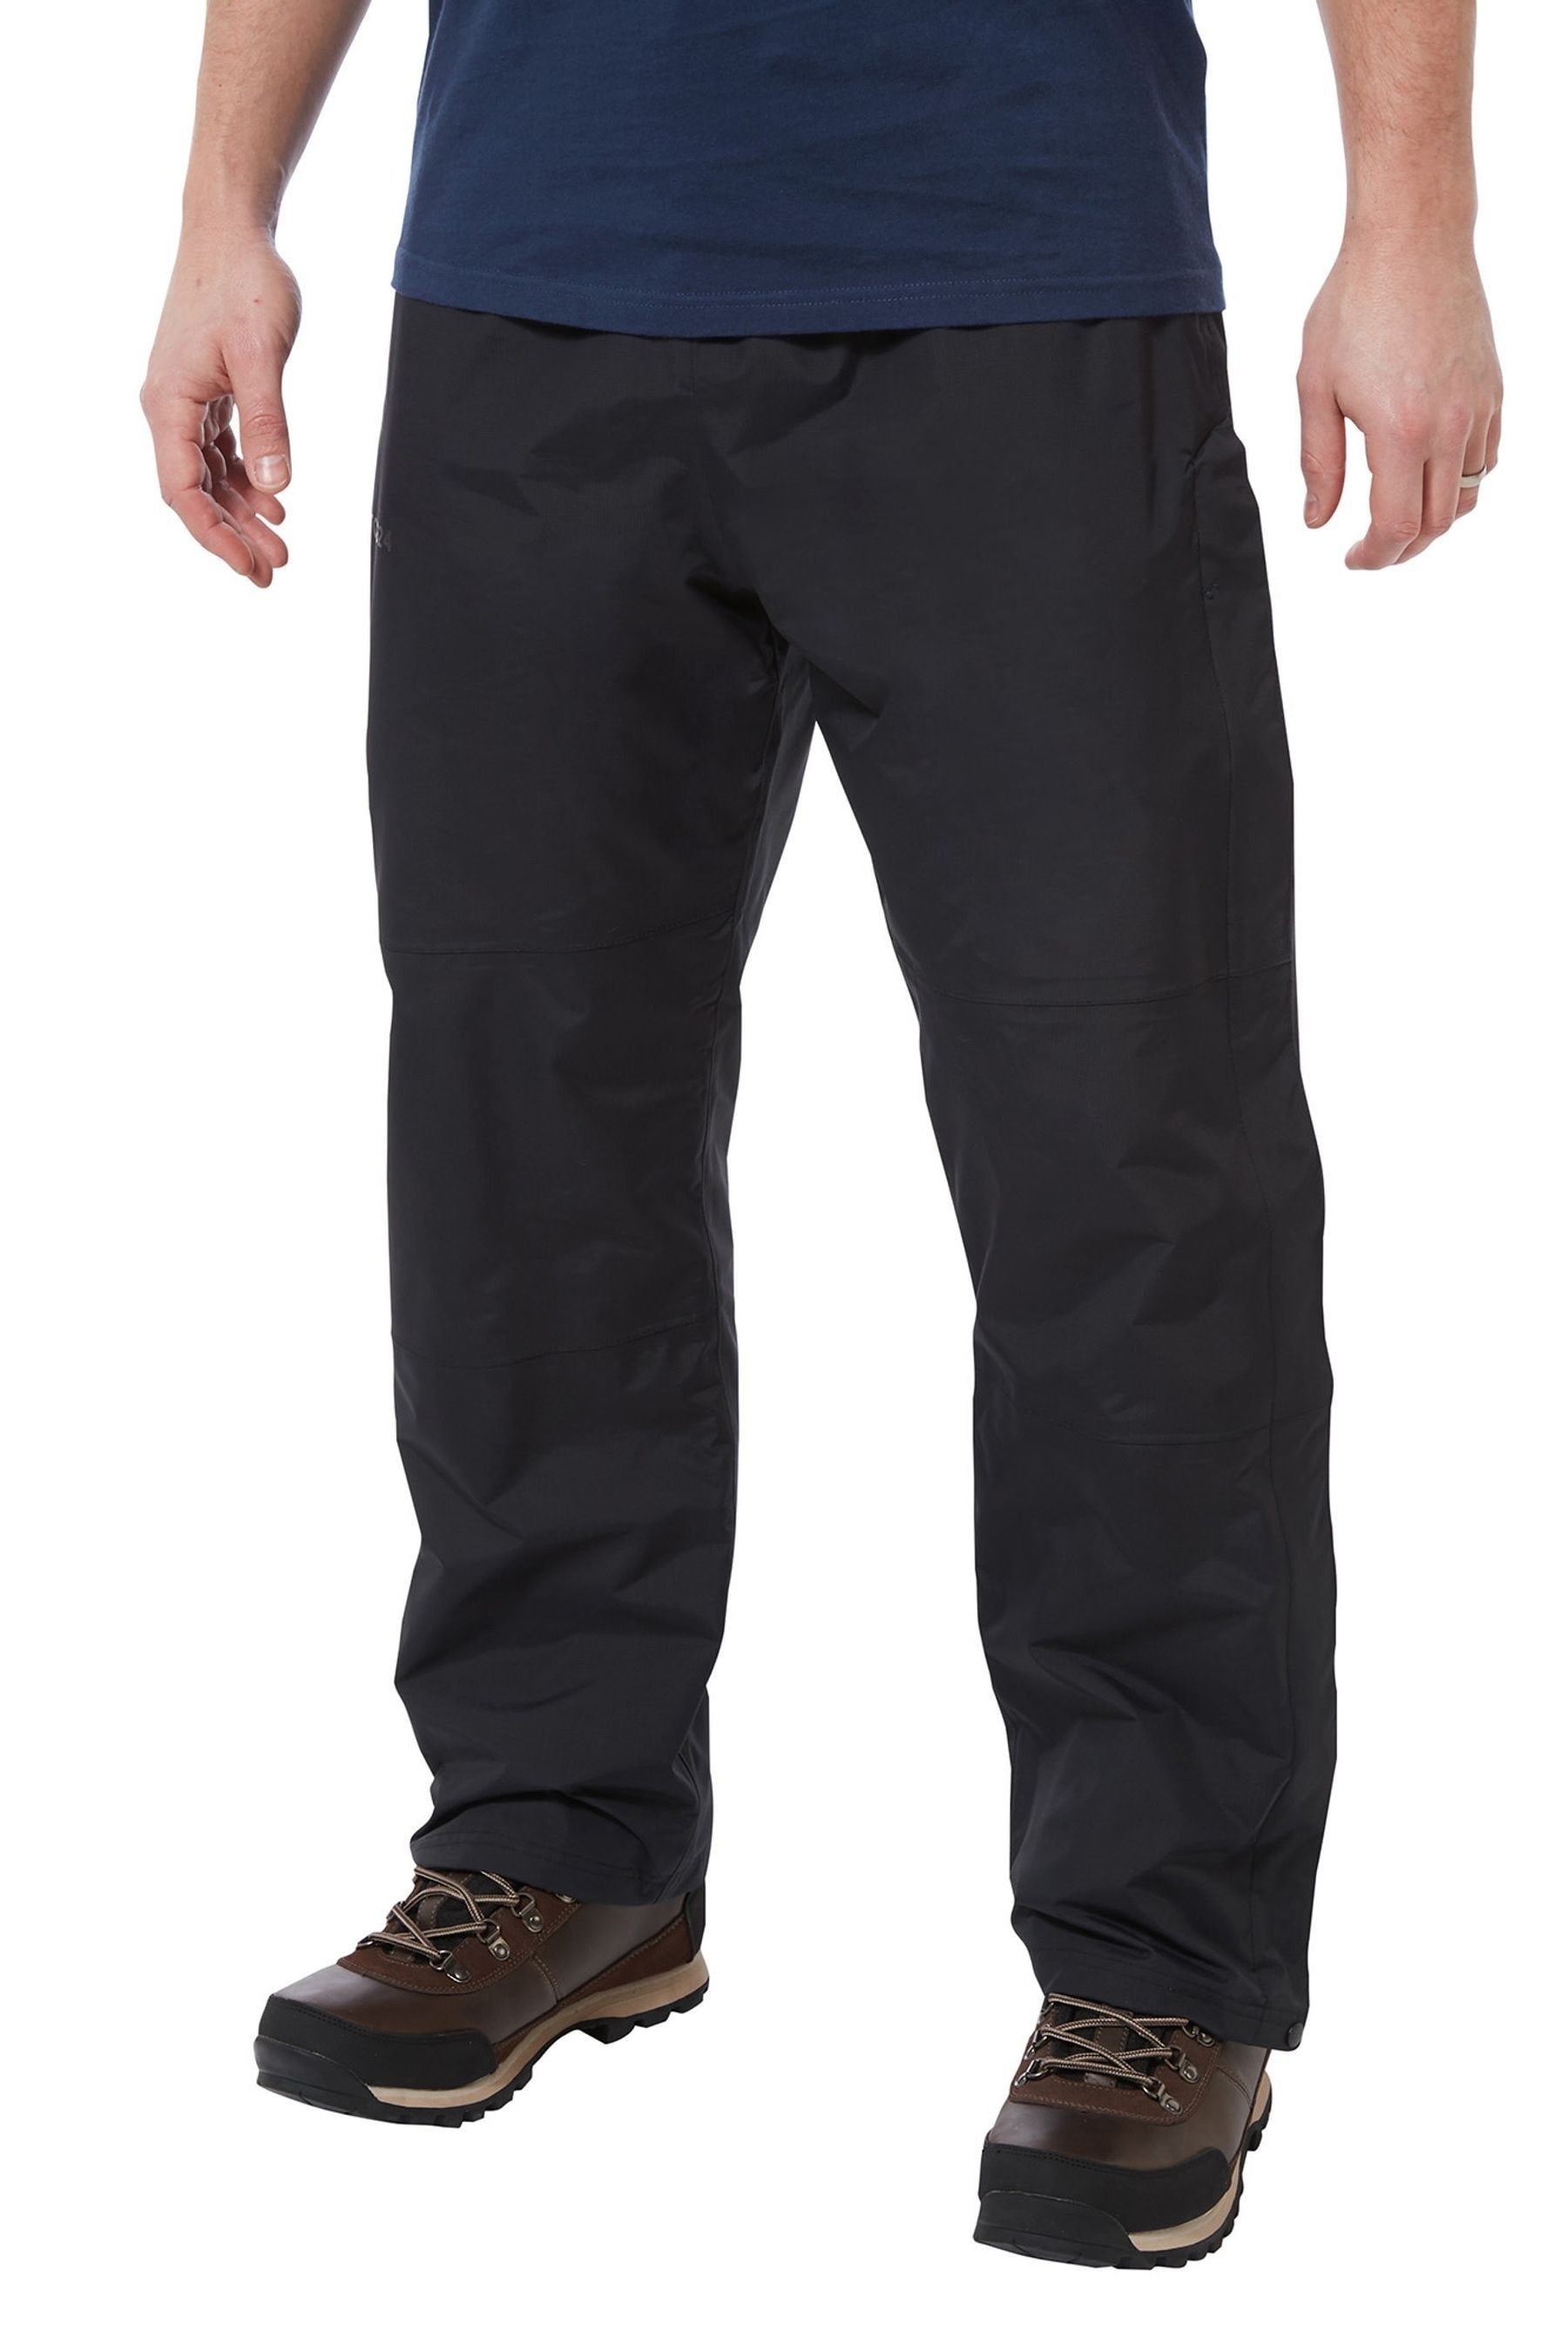 Buy Tog 24 Cool Black Steward Waterproof Trousers from the Next UK ...